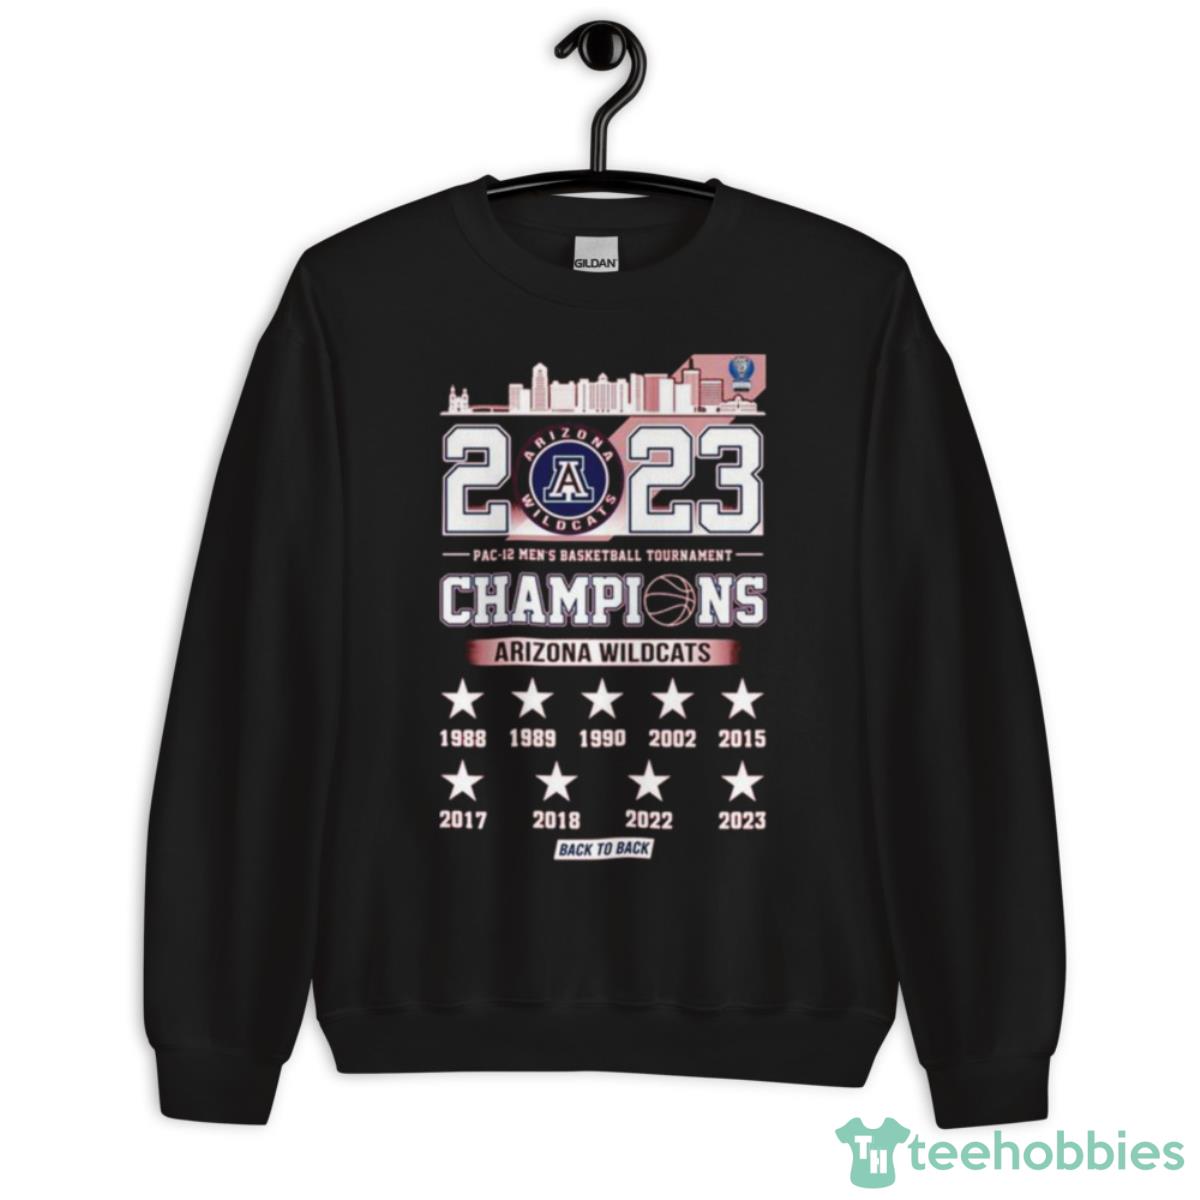 Arizona Wildcats Skyline 2023 Pac 12 Men’s Basketball Tournament Champions Back To Back Shirt - Unisex Crewneck Sweatshirt